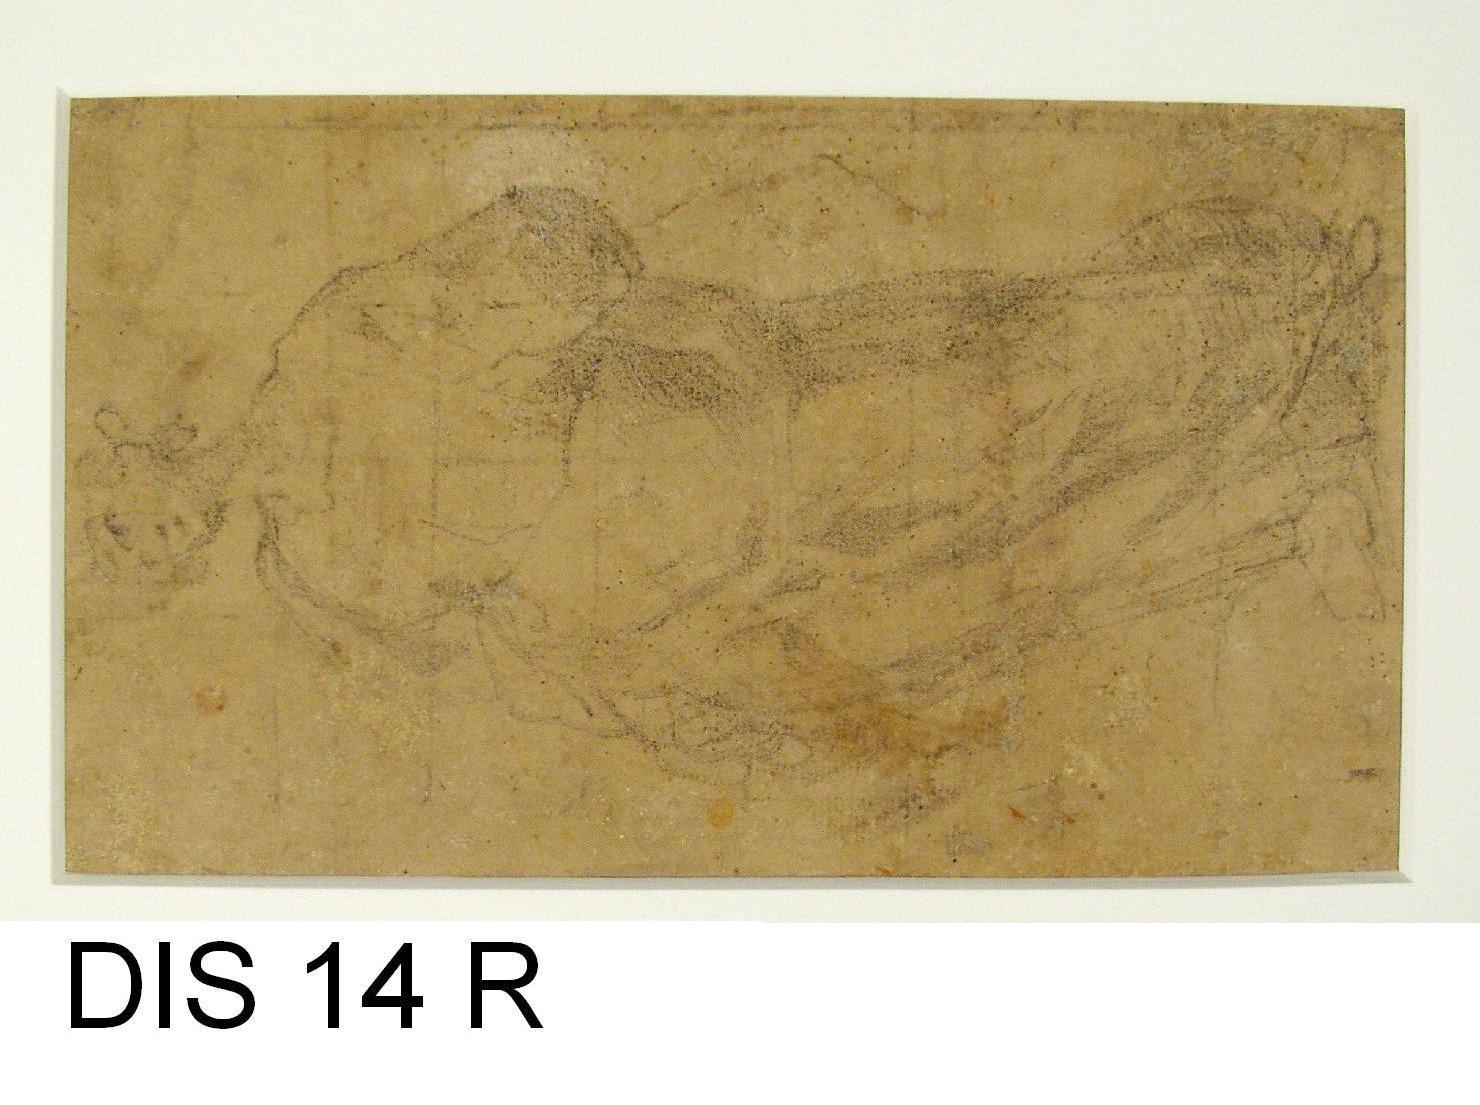 figura femminile panneggiata (disegno) di Cimatori Antonio (attribuito) (secc. XVI/ XVII)